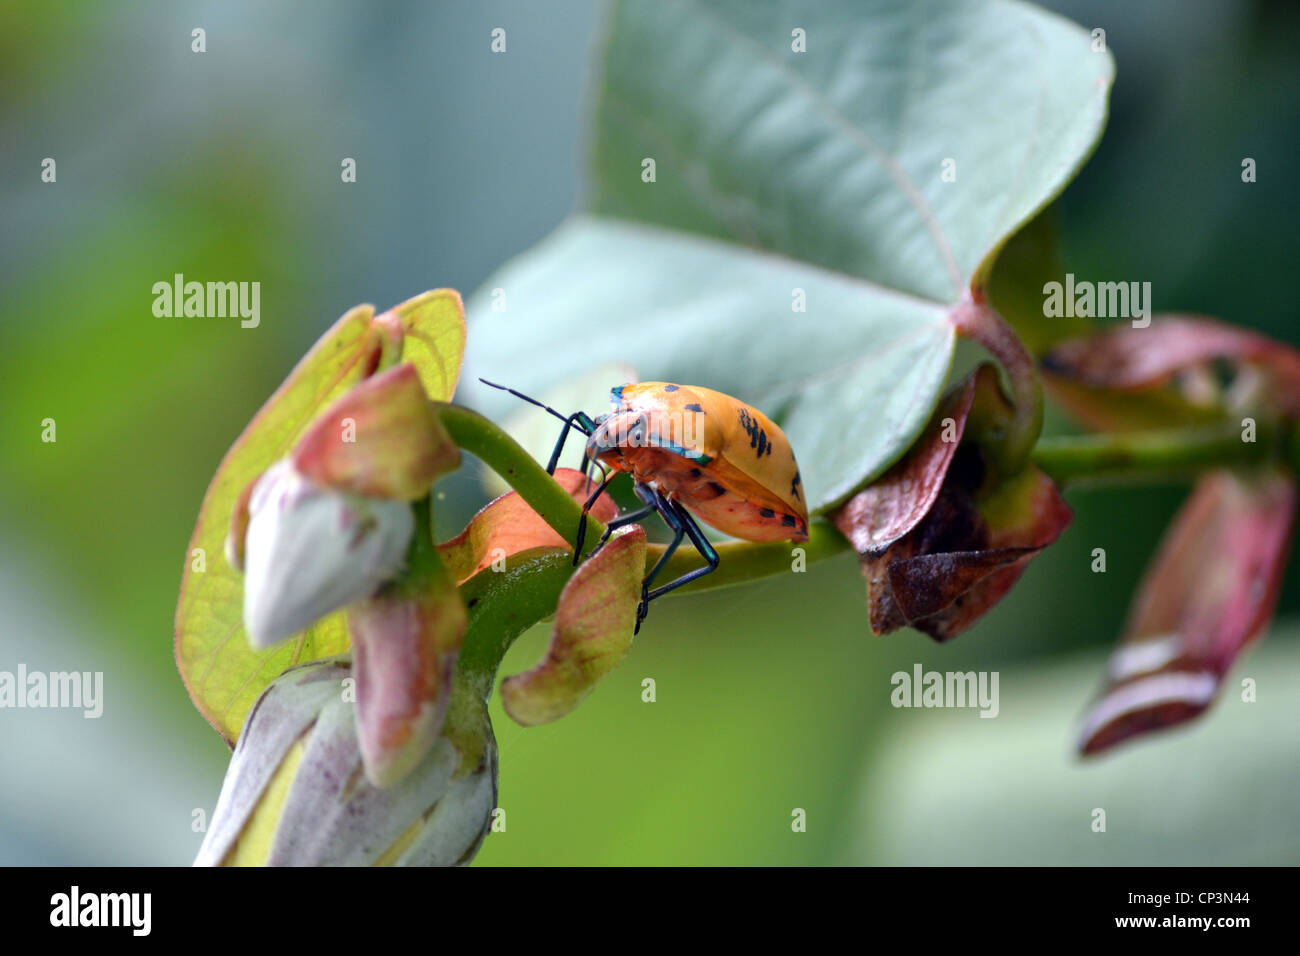 cotton harlequin bug on leaf Stock Photo